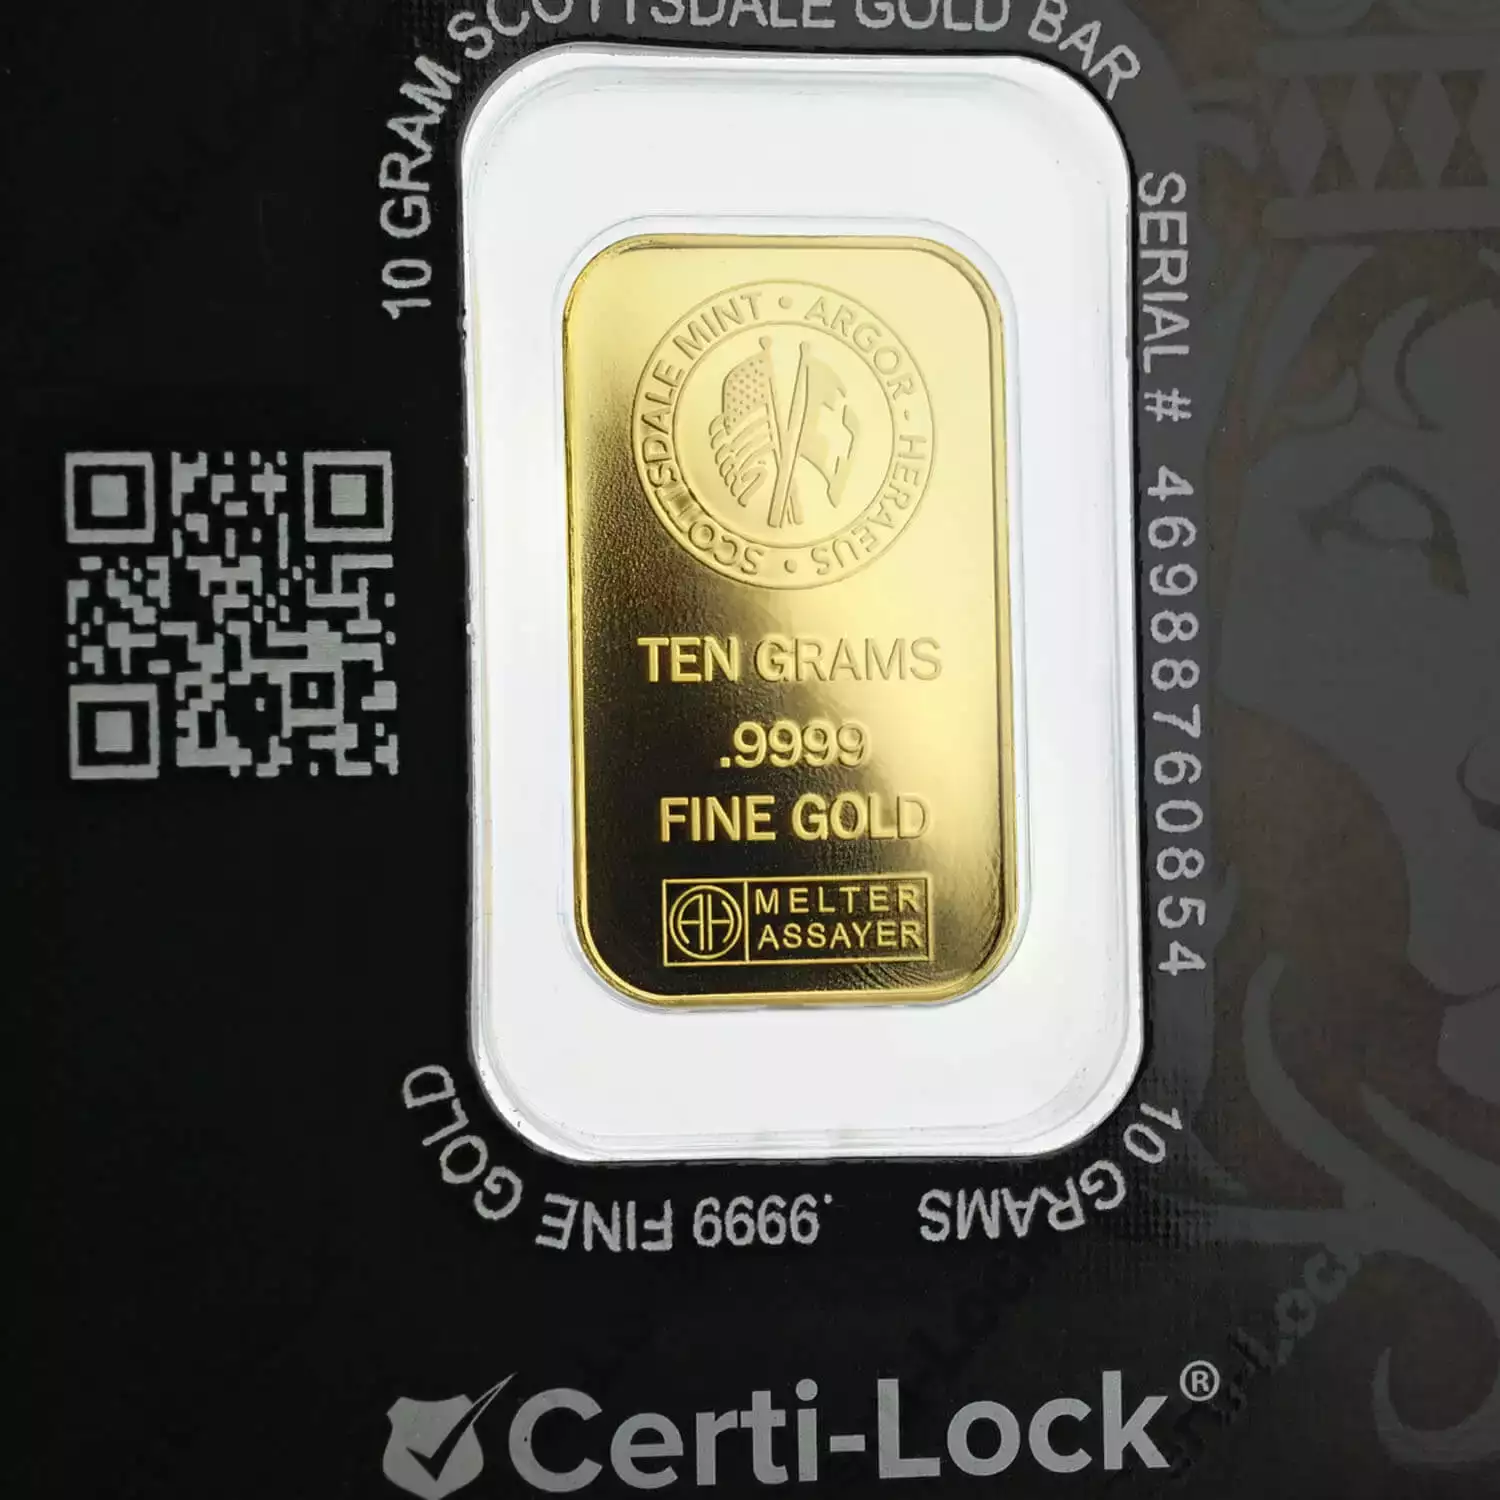 Scottsdale Mint 10g Gold Lion Bar in Certilock (5)